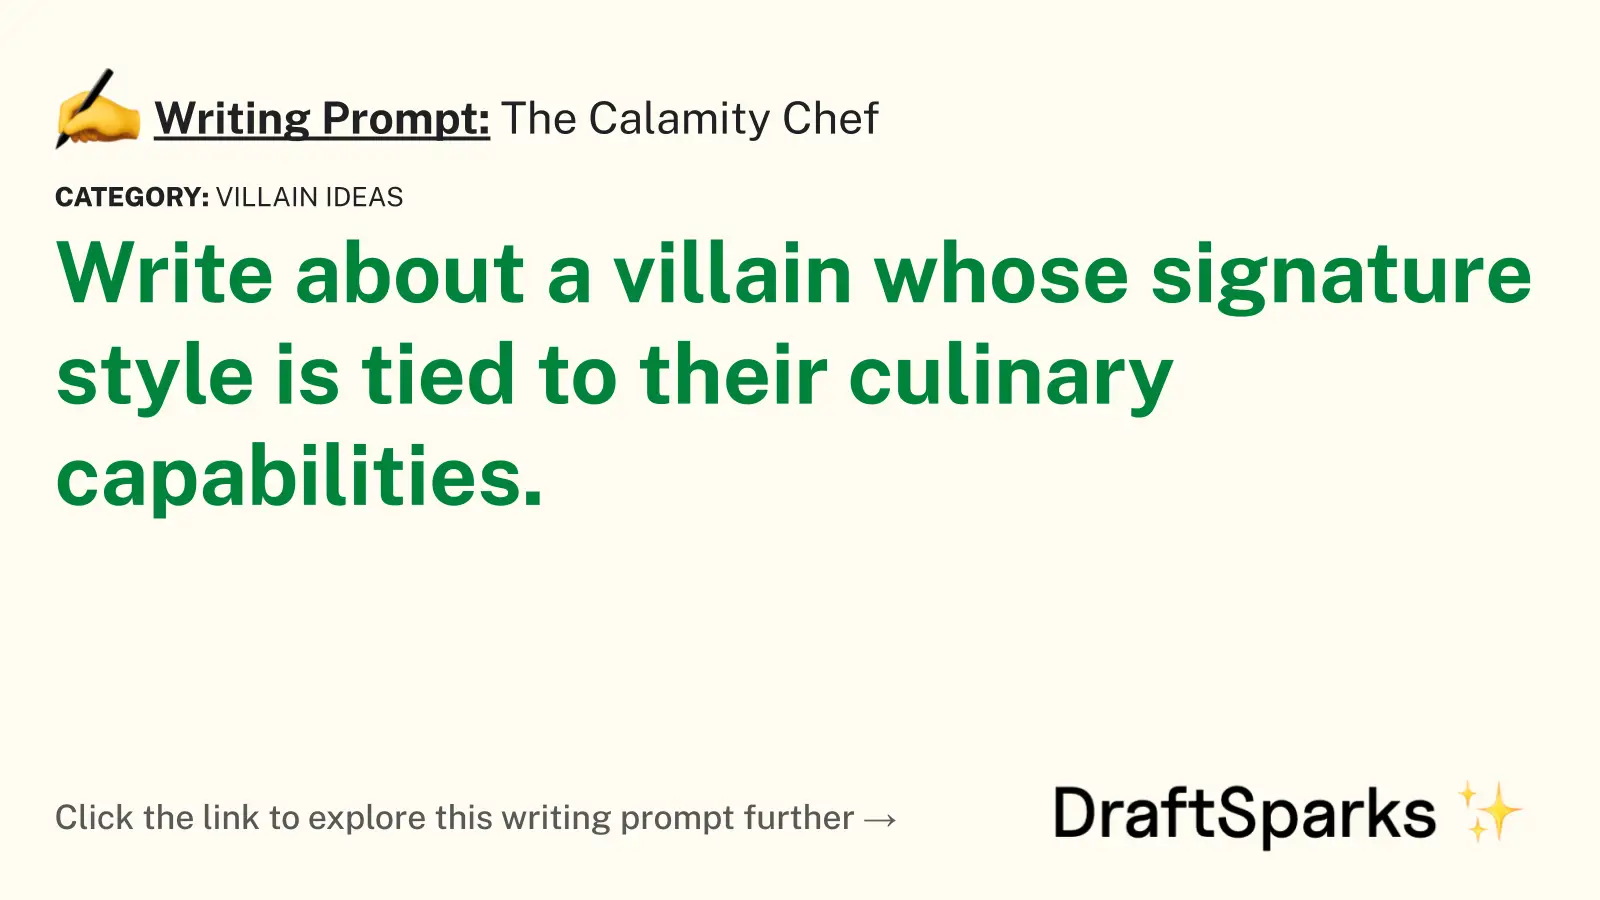 The Calamity Chef